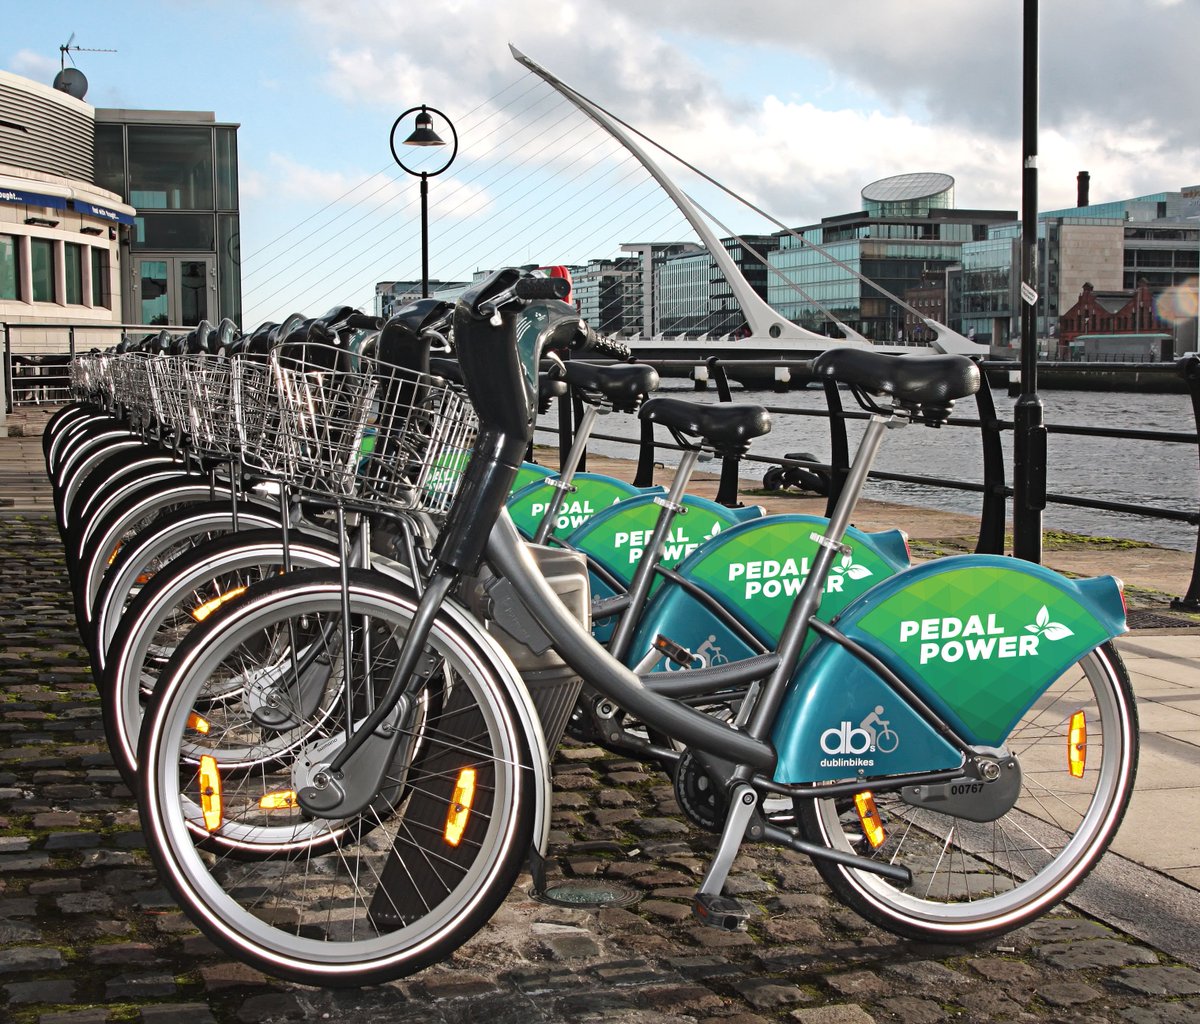 dublinbikes promotes Pedal Power! 🚲💯

Read all about it here: jcdecaux.ie/news/dublinbik… 

#bikesharedublin #dublinbikes #cycledublin